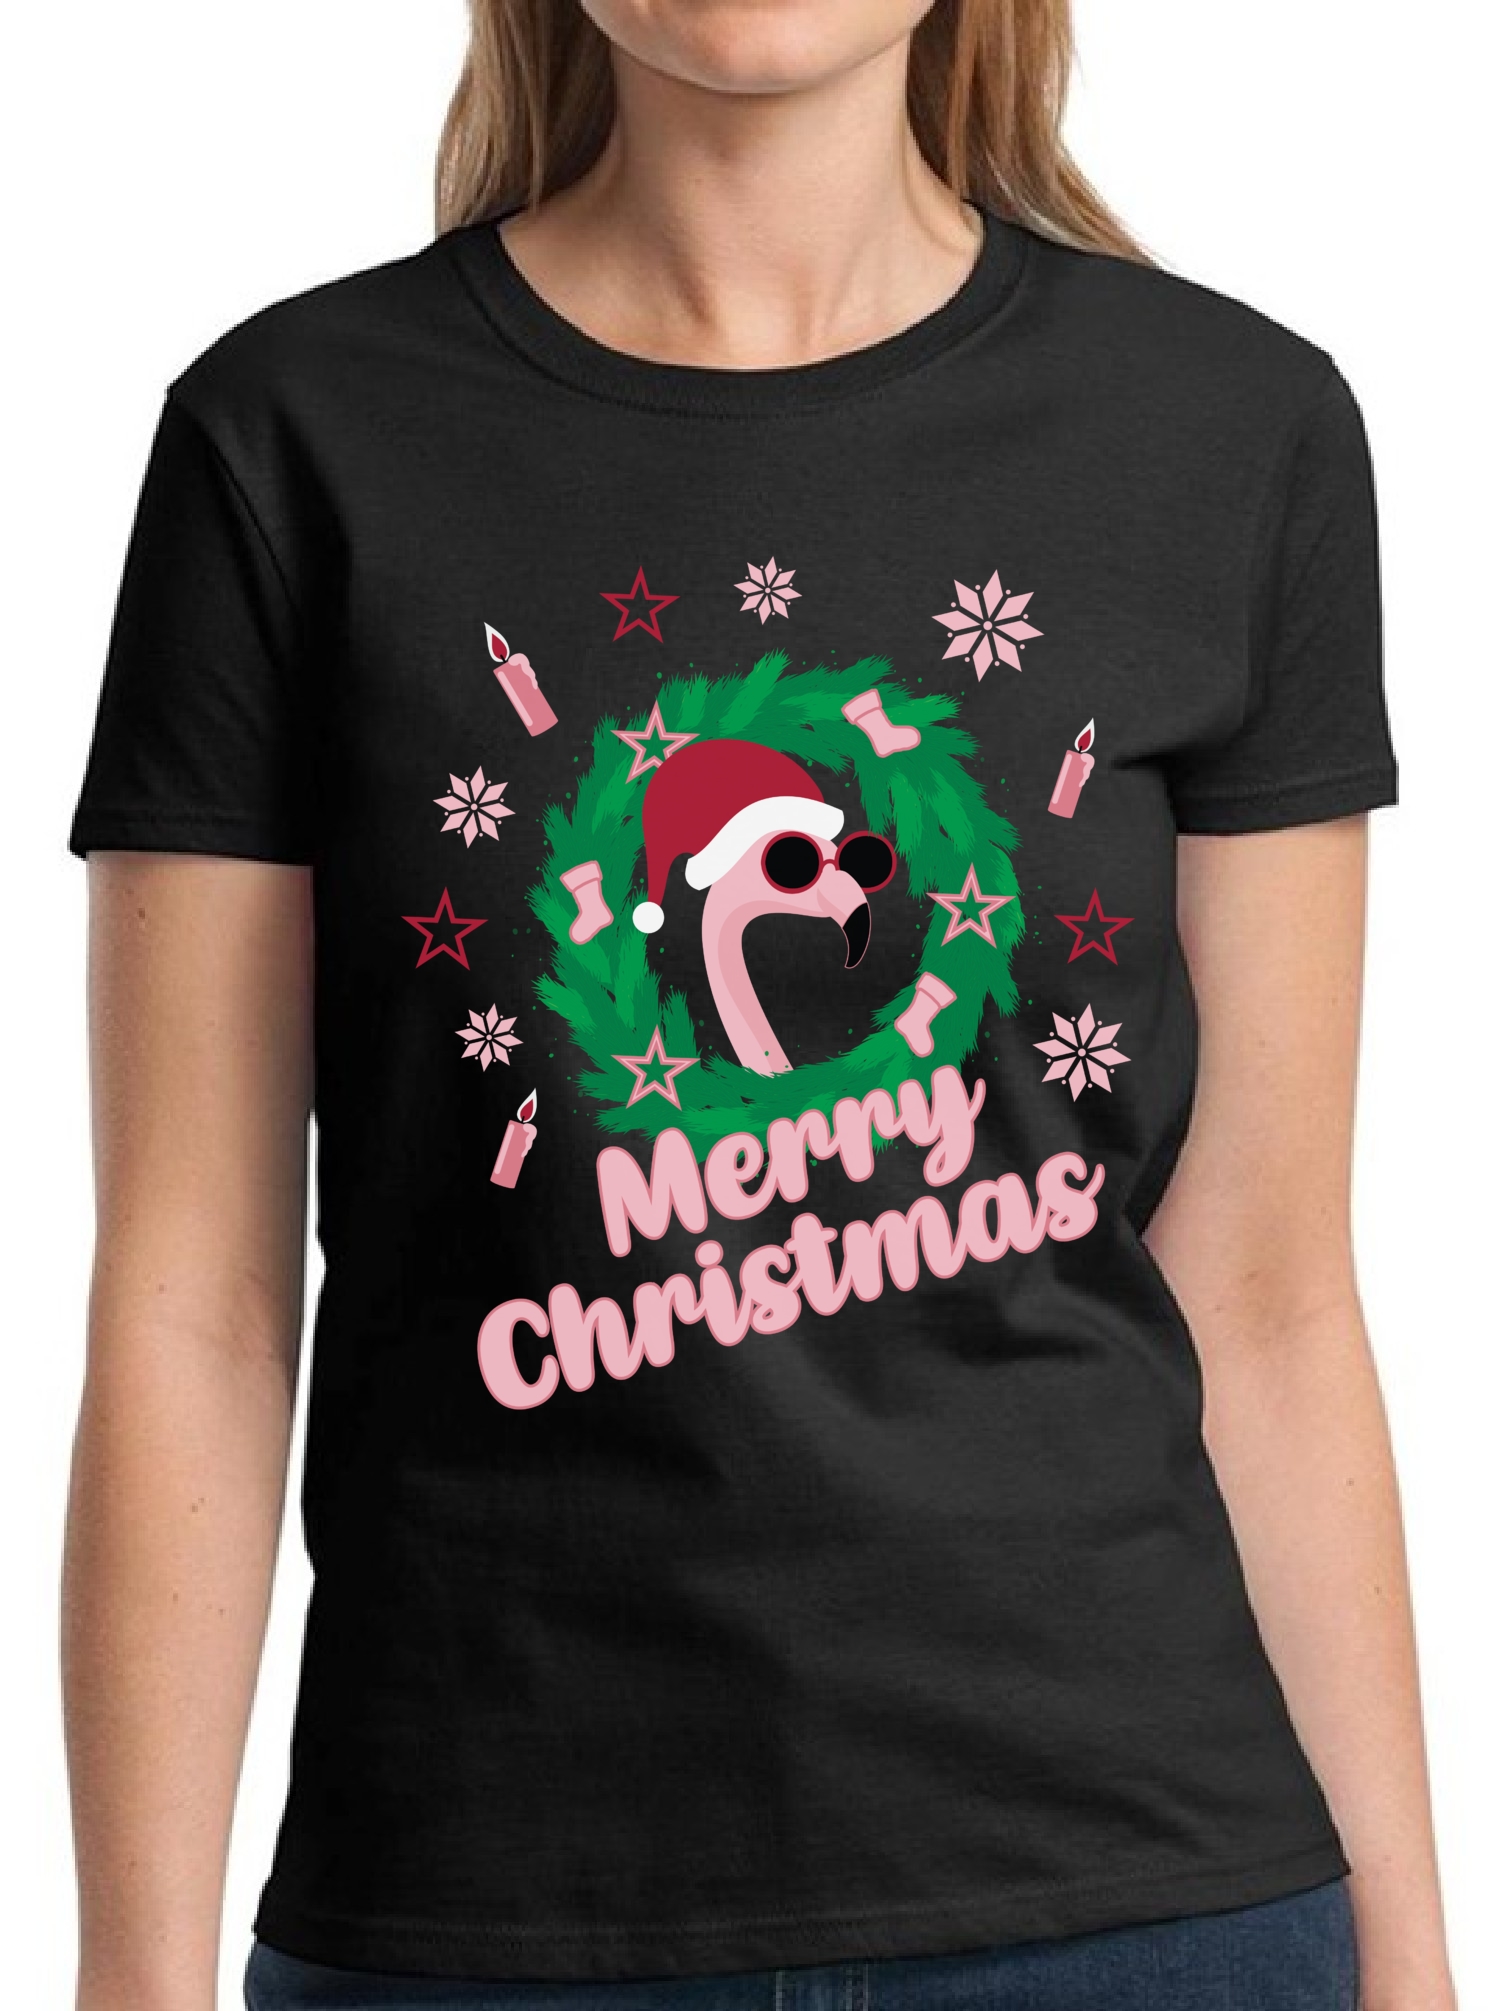 Merry Christmas Flamingo Ugly Funny Sweater Xmas Holiday Gift Unisex Sweatshirt 